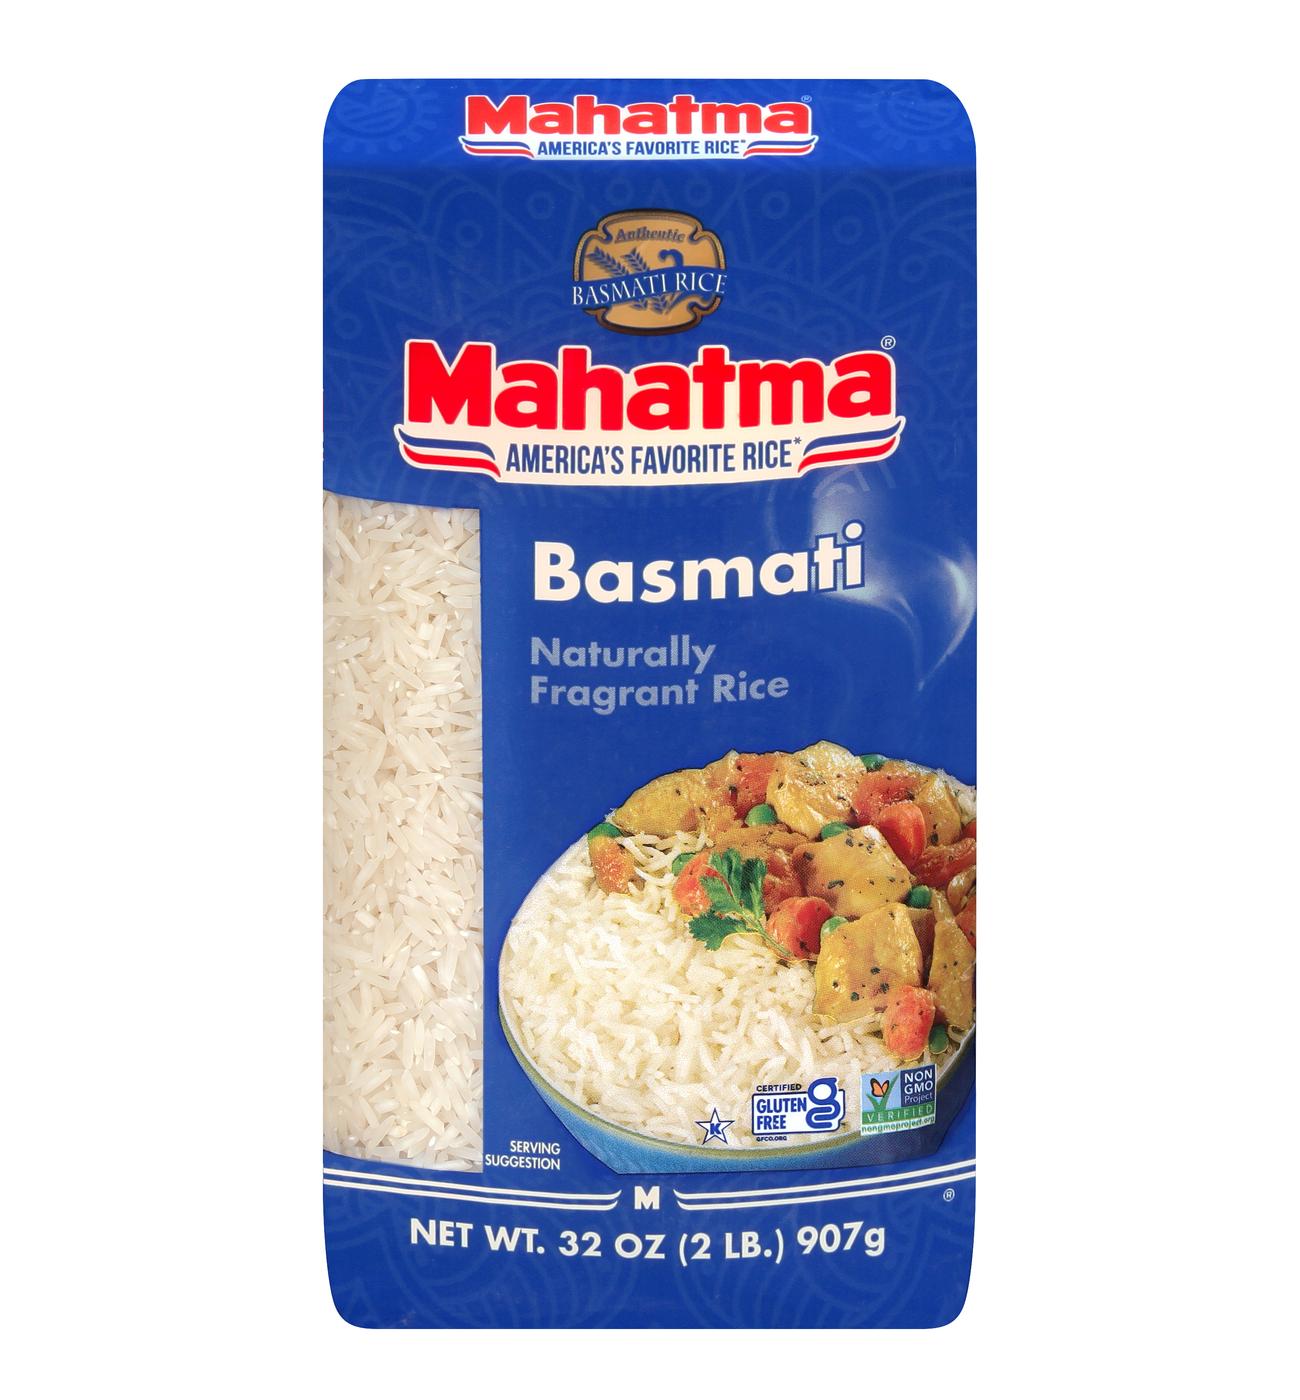 Mahatma Basmati Rice; image 1 of 6